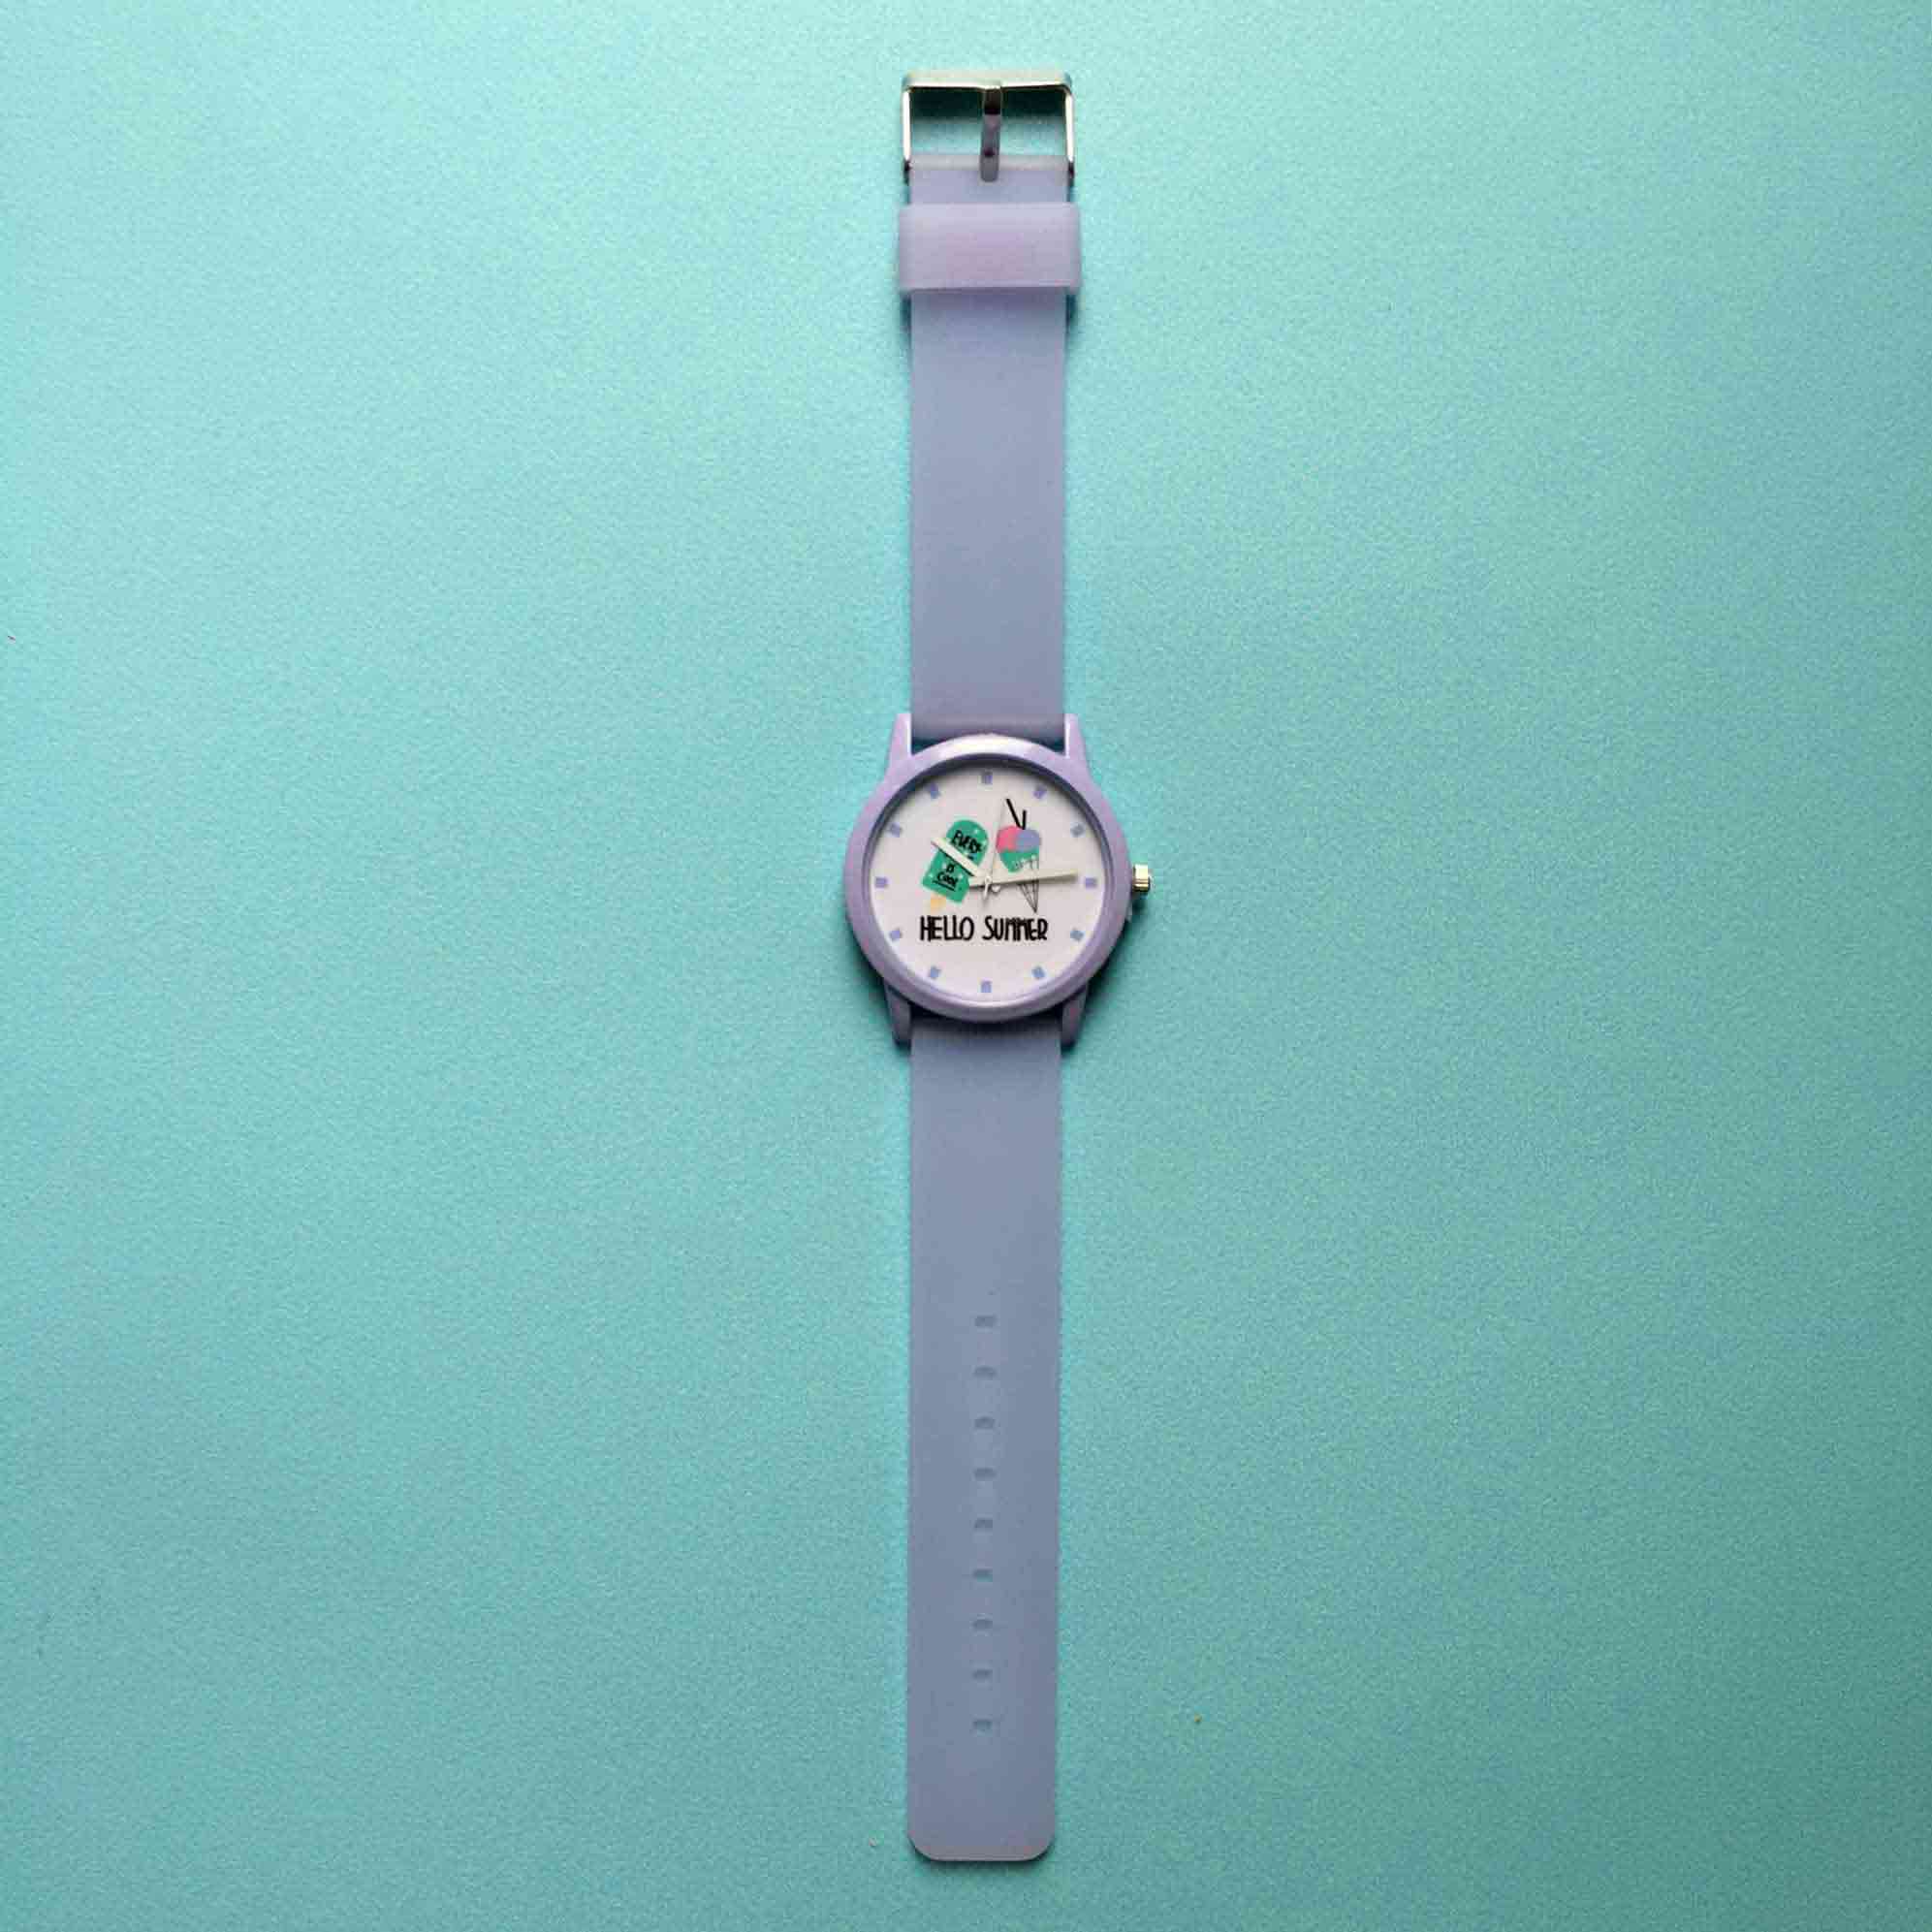 Часы «Hello summer» фиолетовые